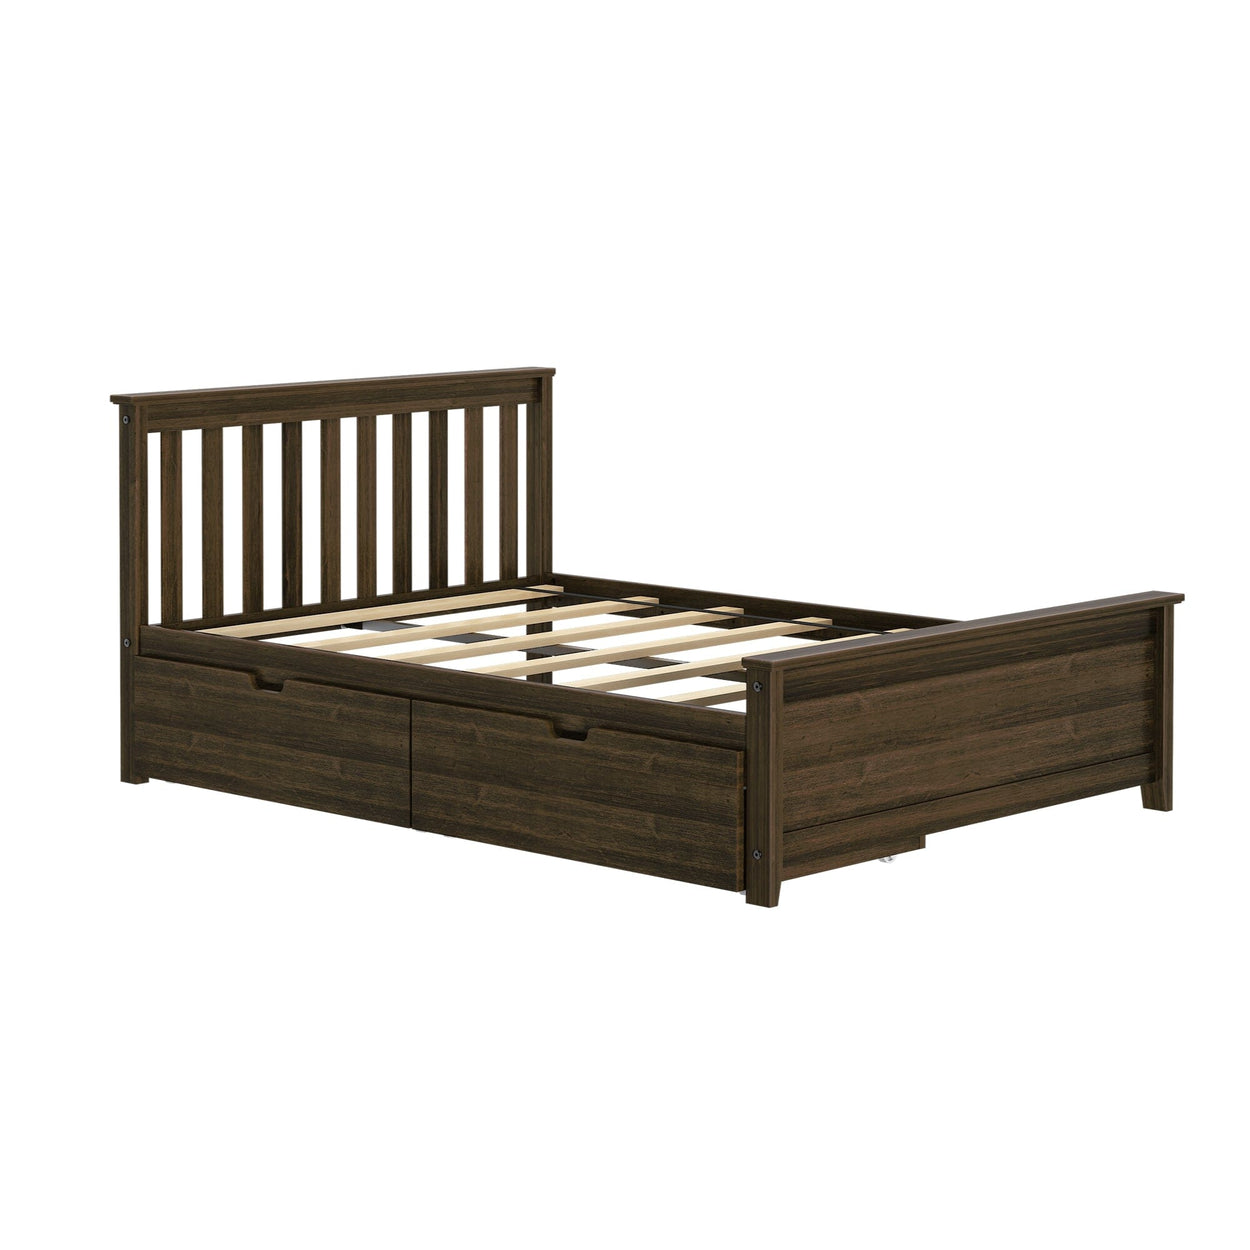 187211-008 : Kids Beds Full-Size Platform with Under Bed Storage Drawers, Walnut